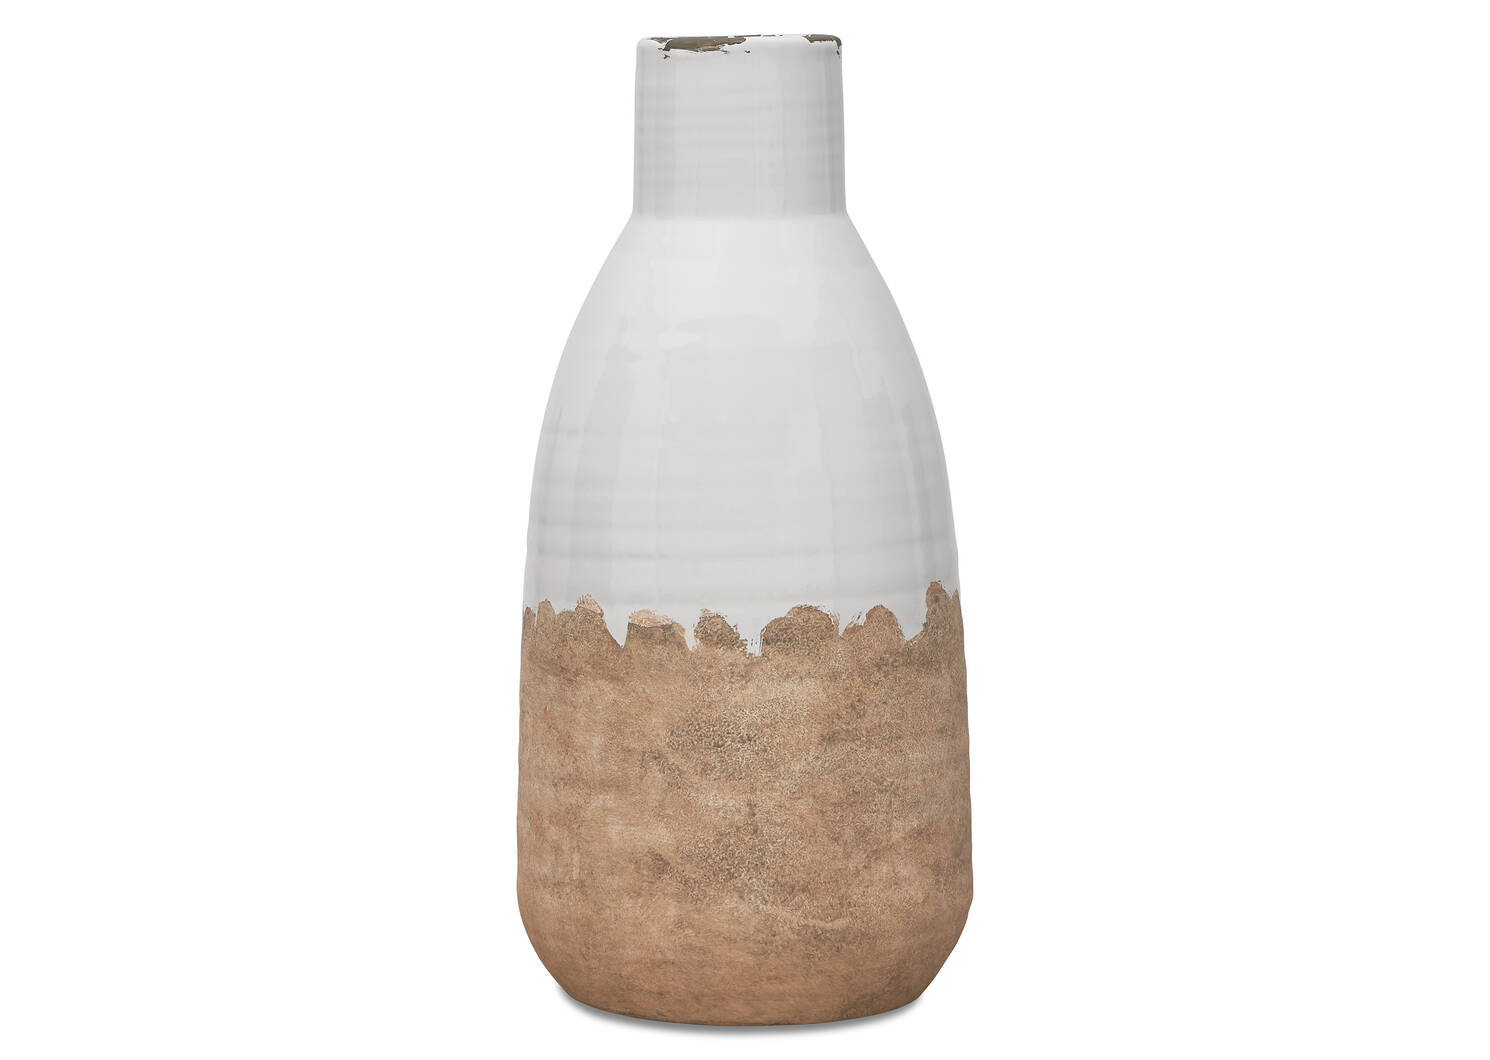 Vanna Vase Large Milk/Natural